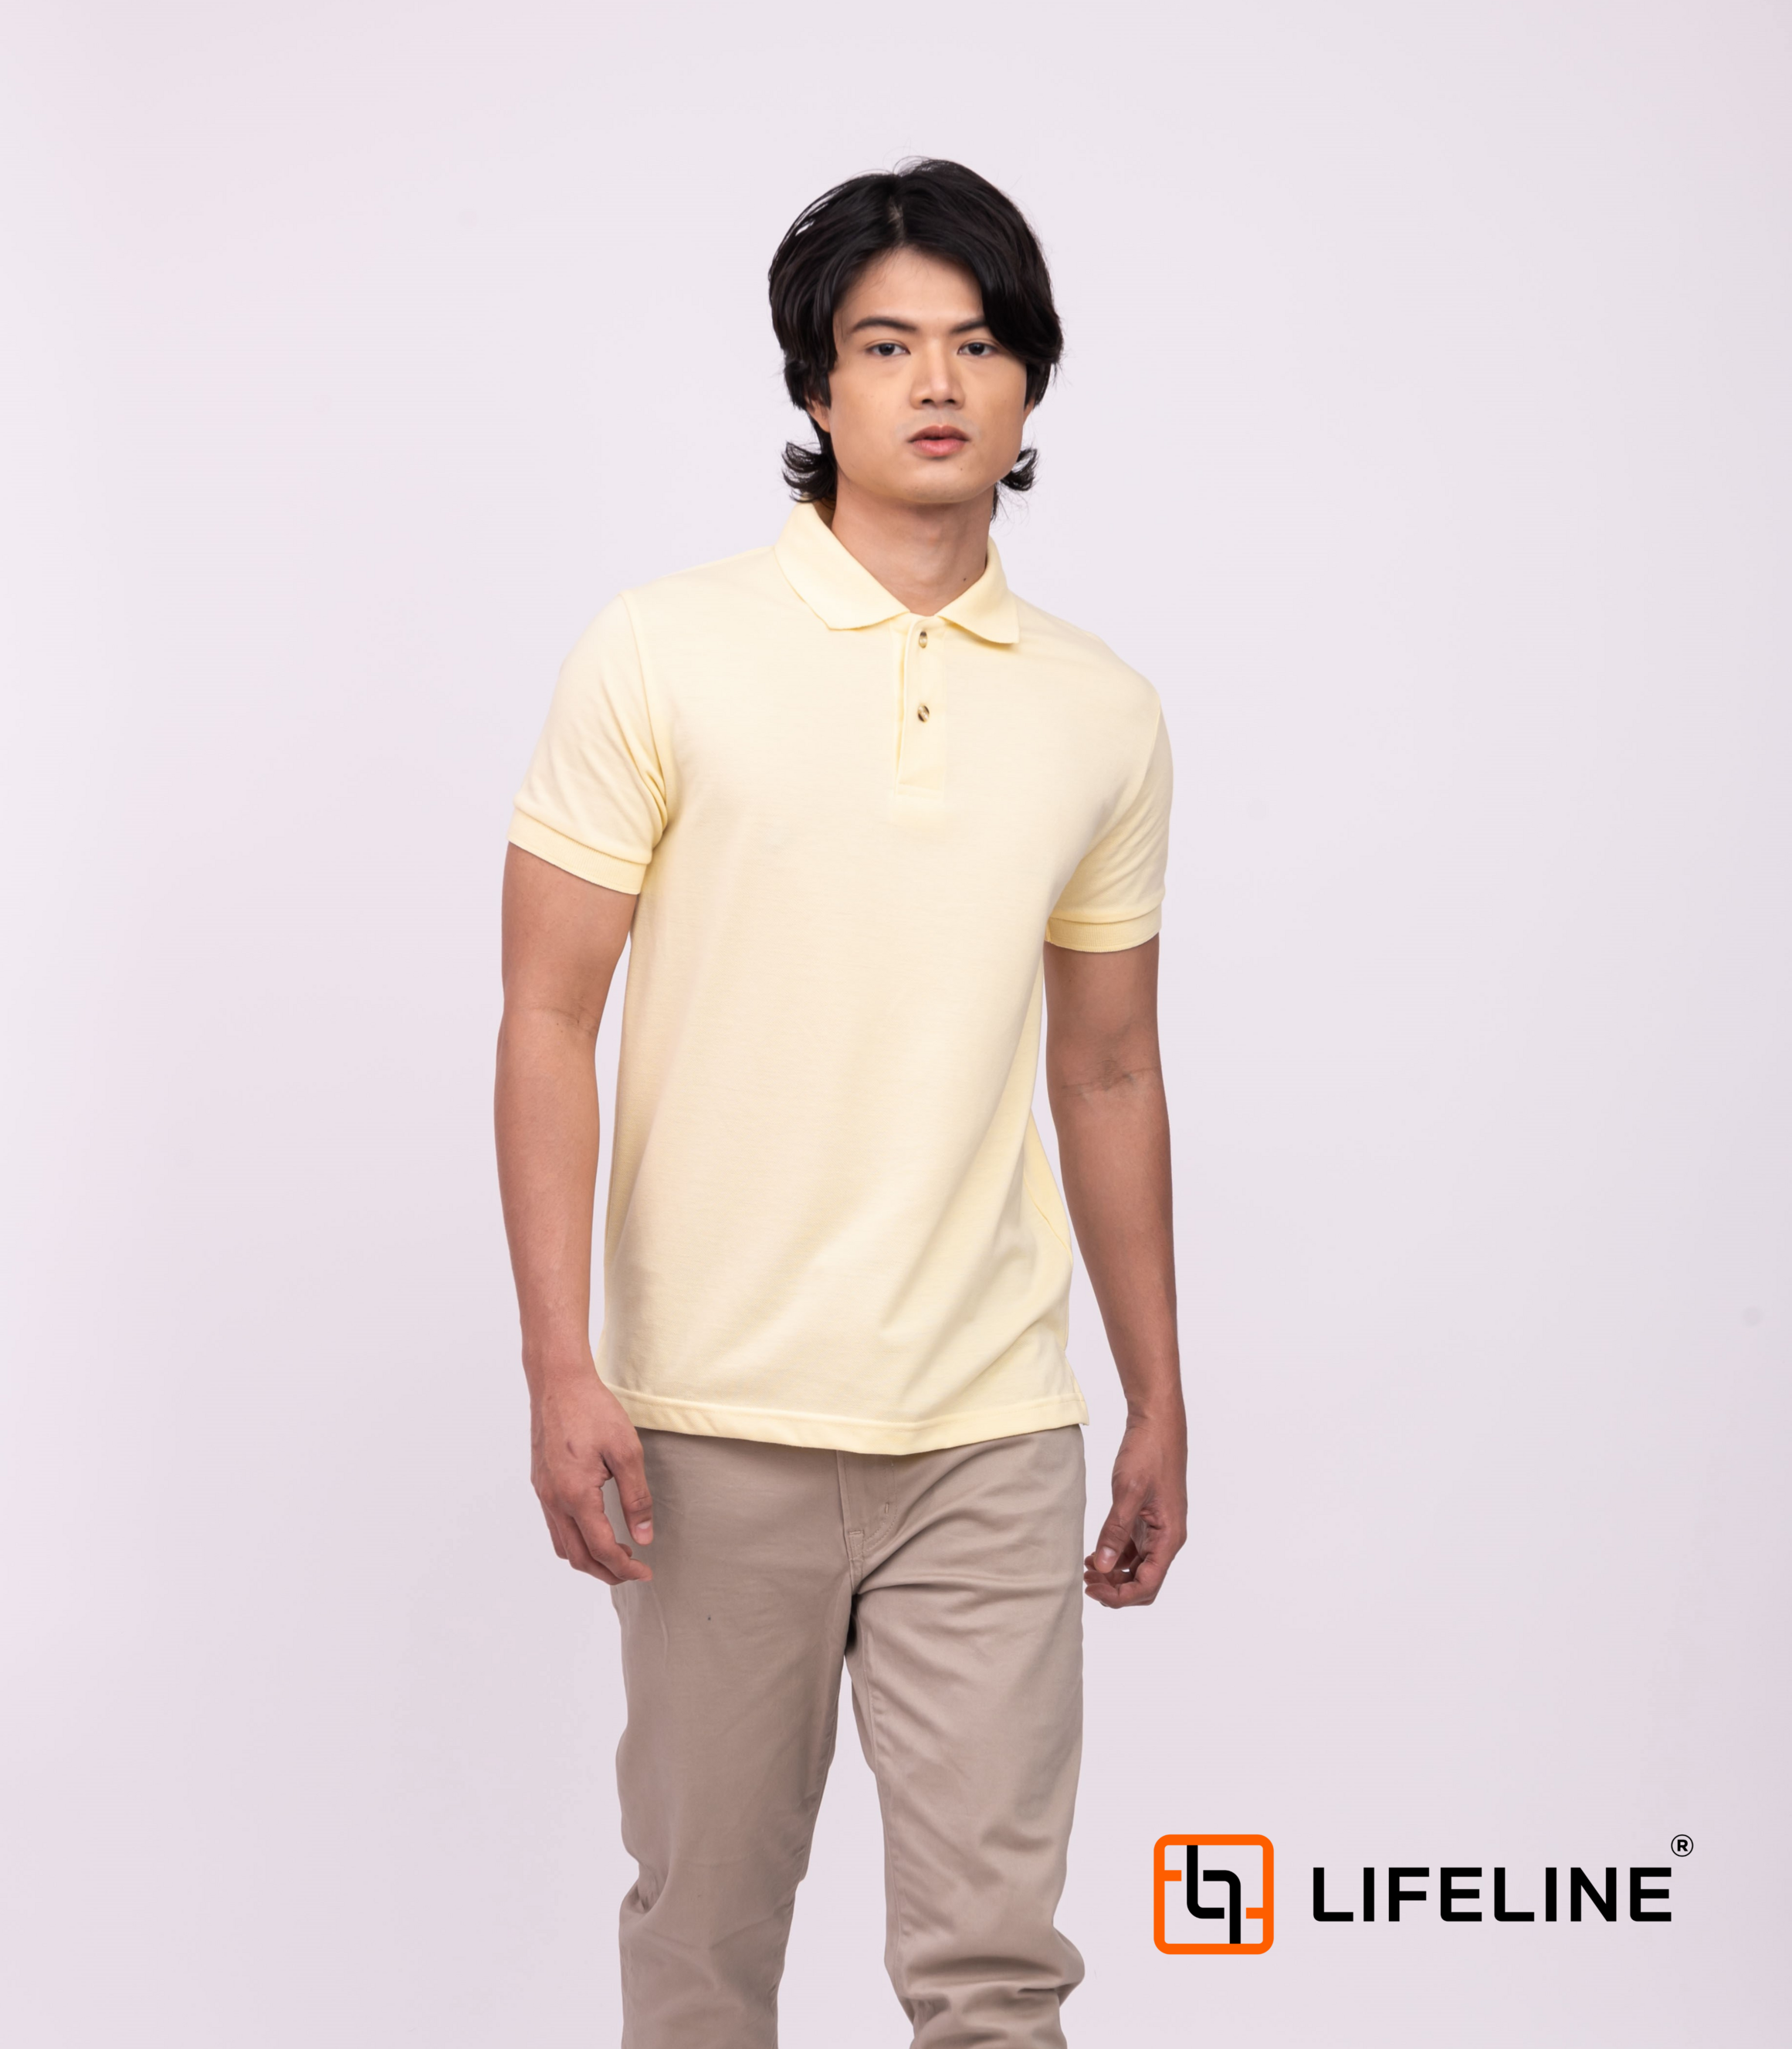 Lifeline Men’s Poloshirt (Cream)